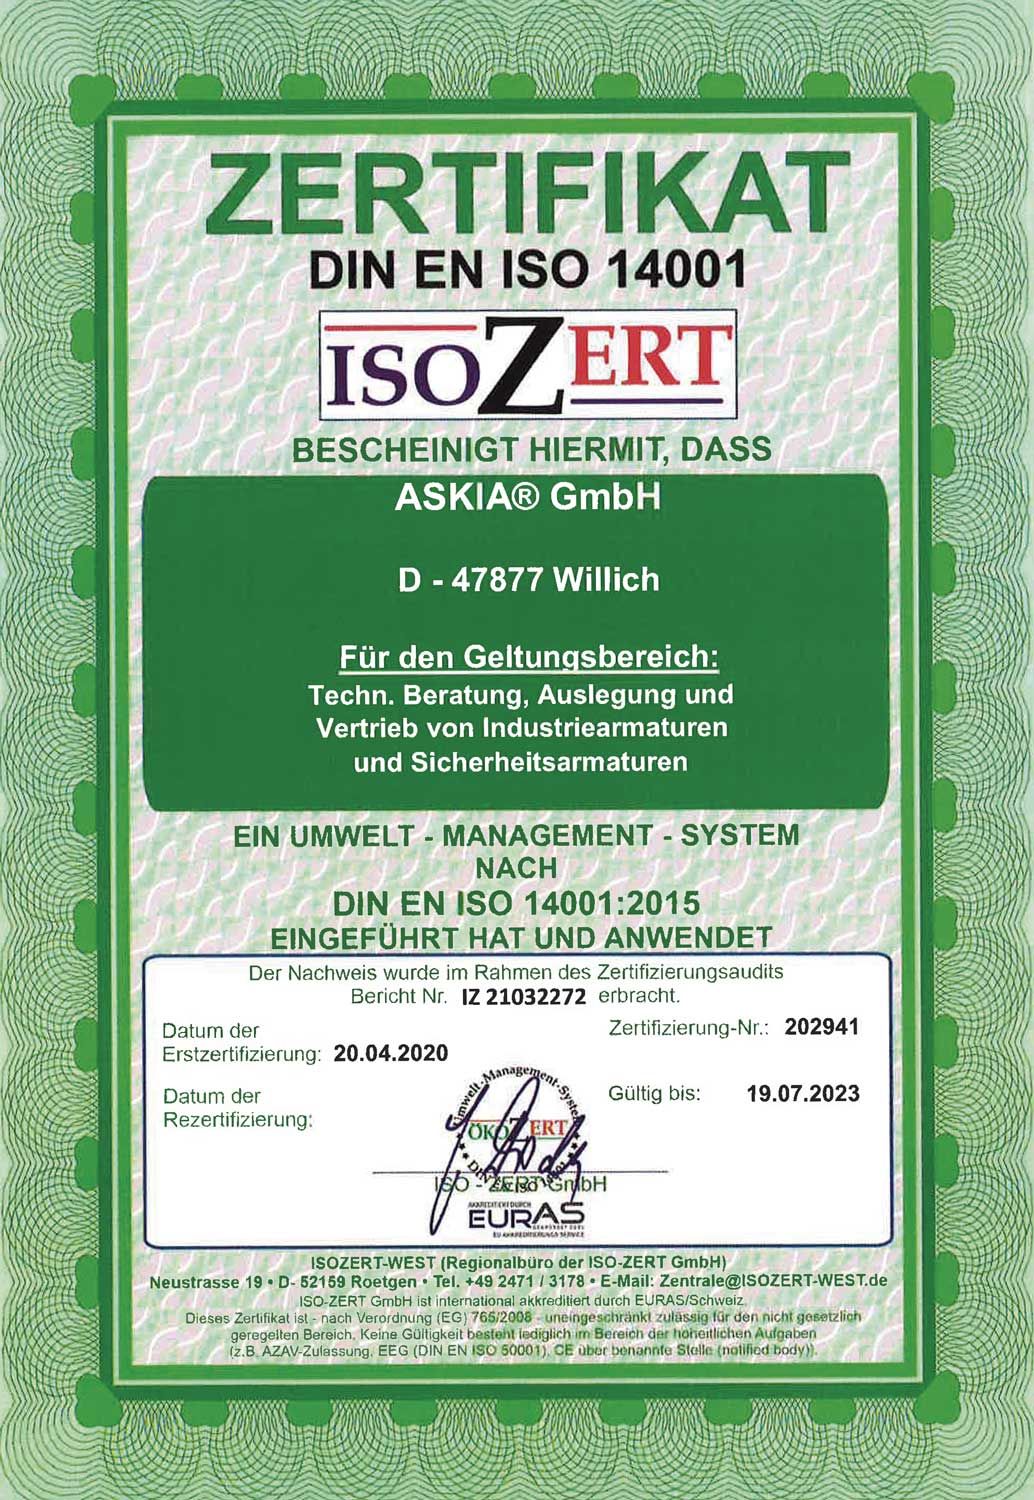 Zertifiziert gemäß DIN EN ISO 4001